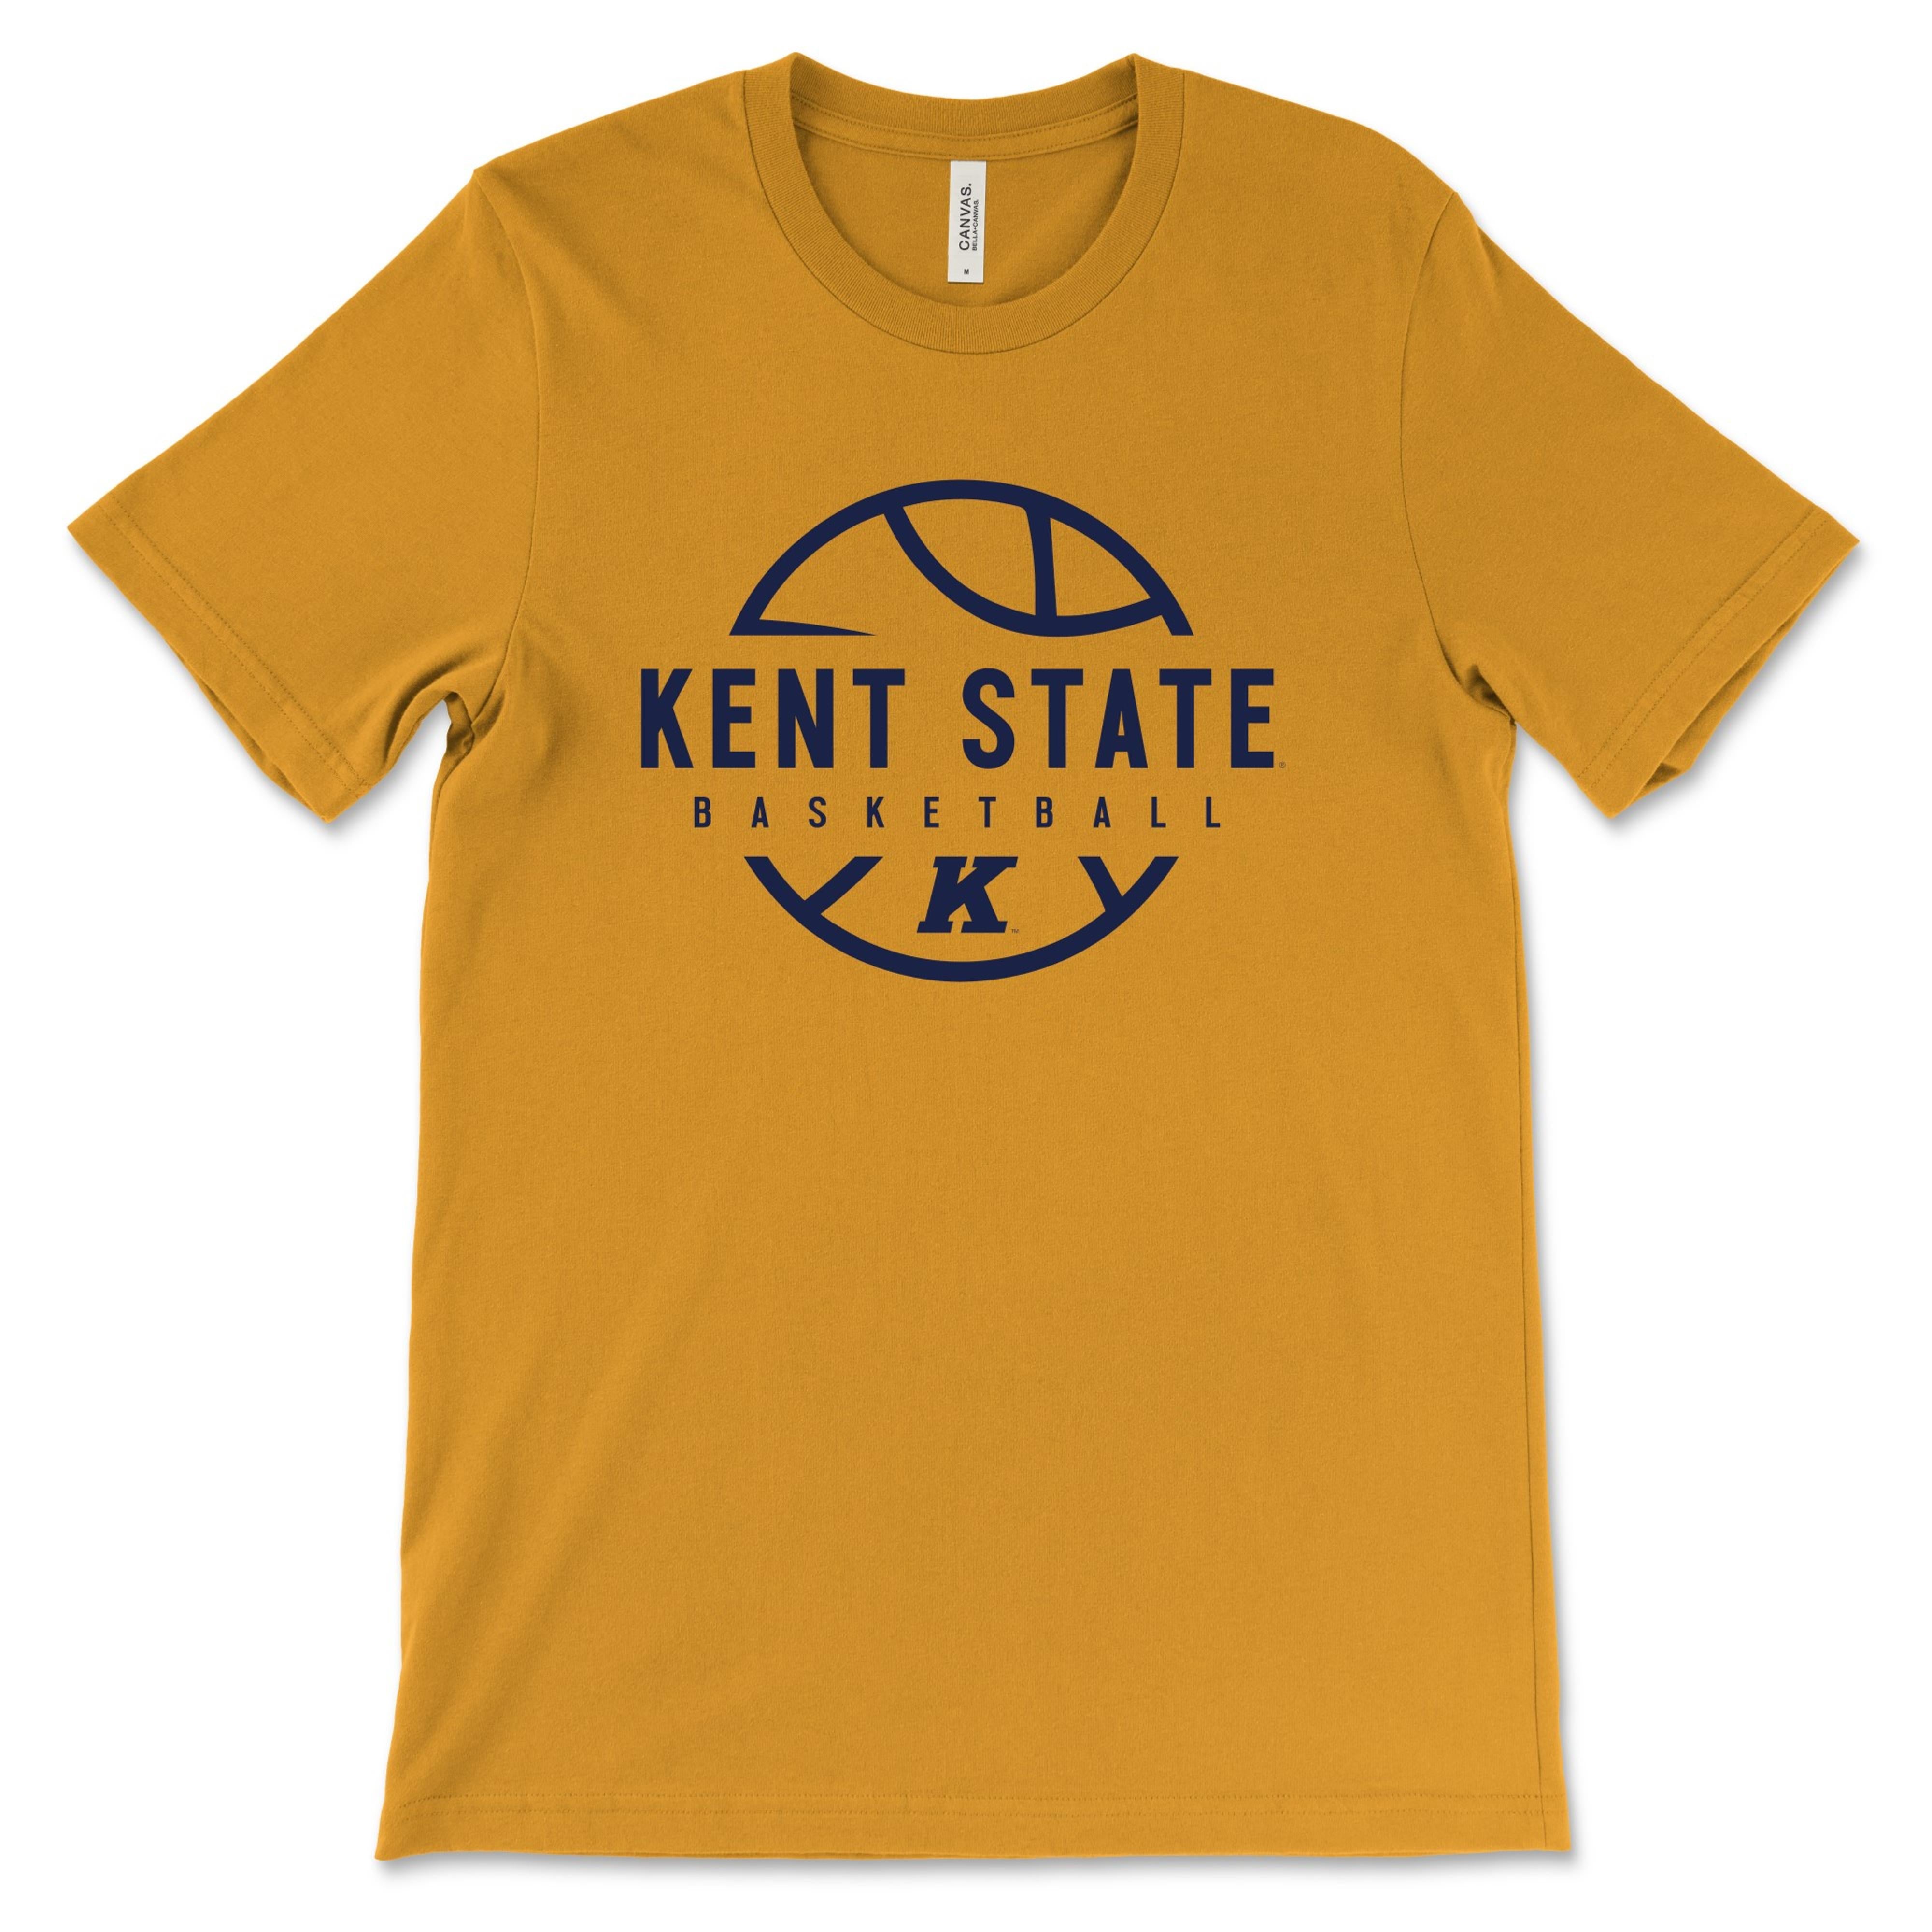 Kent State Gold Basketball T-Shirt